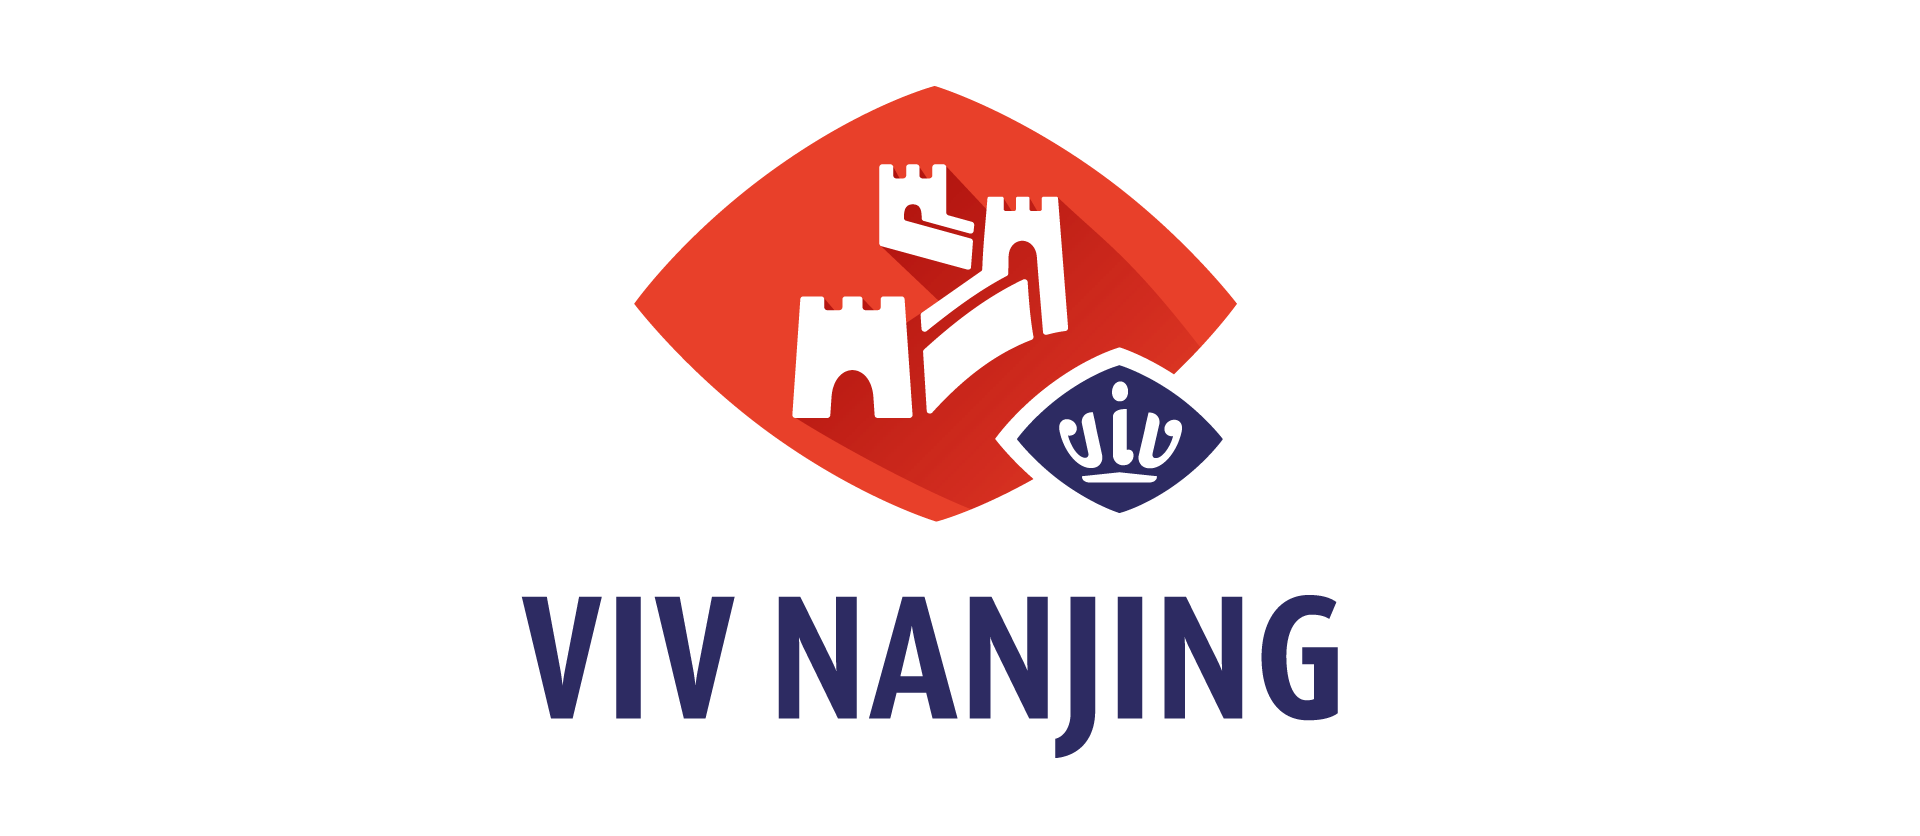 VIV Nanjing